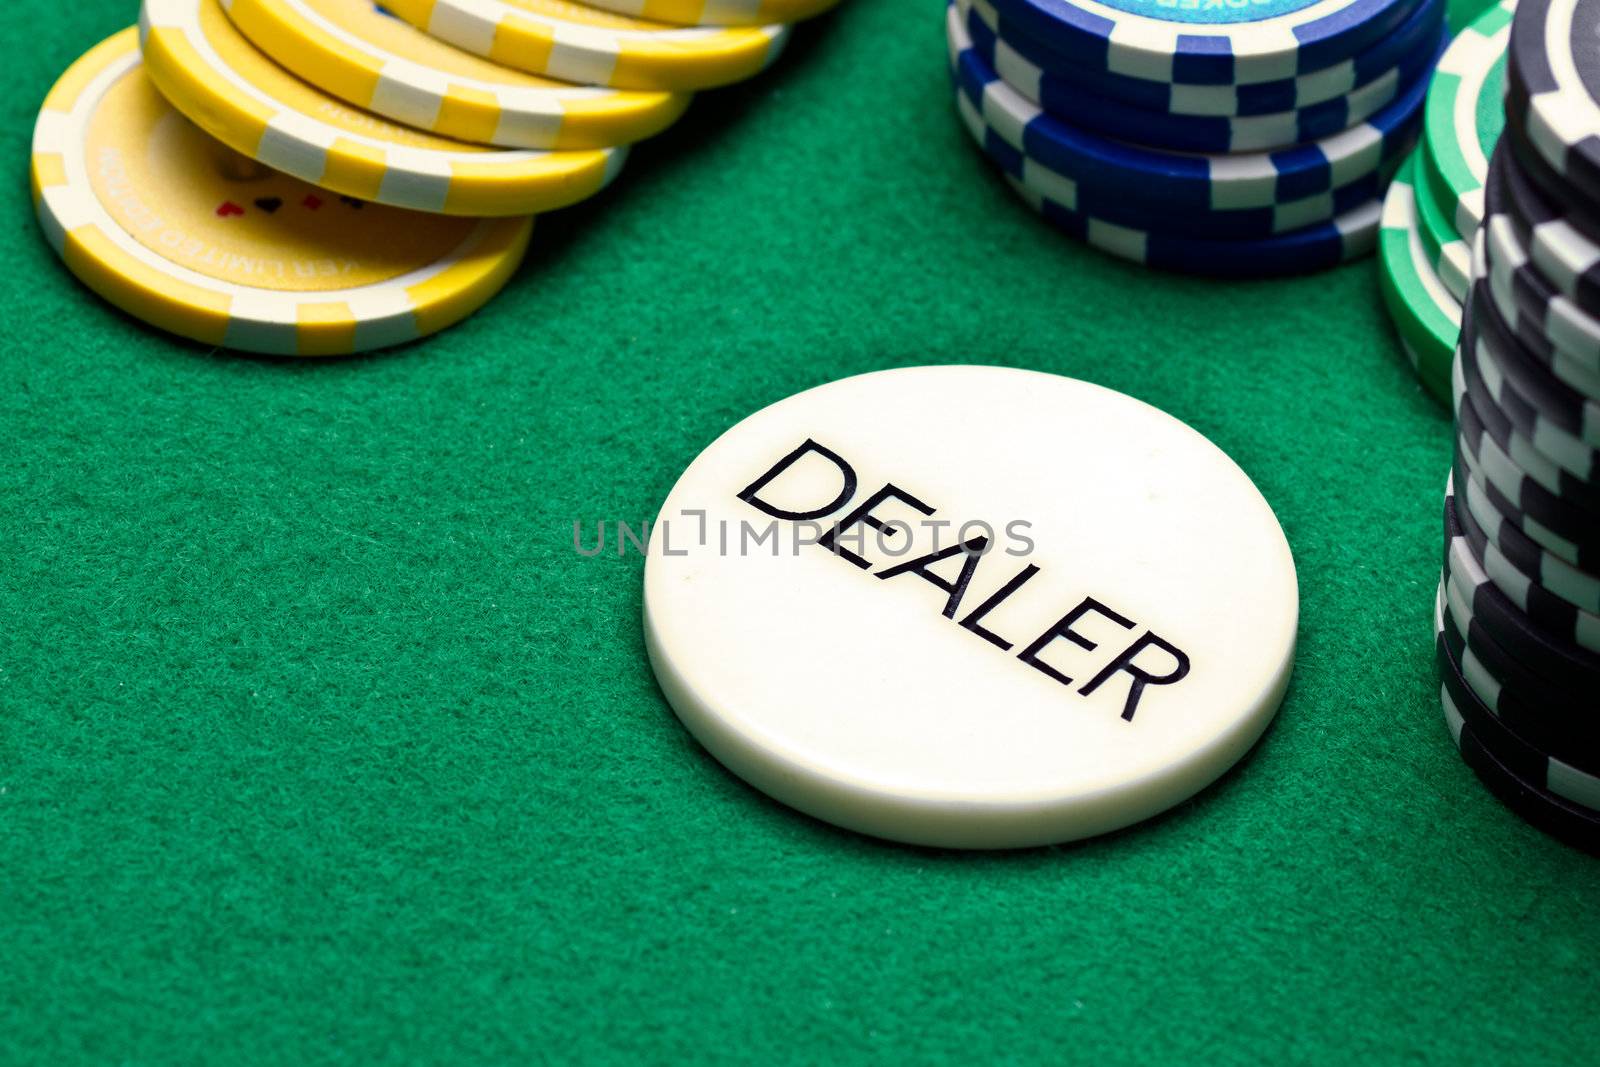 Poker dealer button and chips on green felt